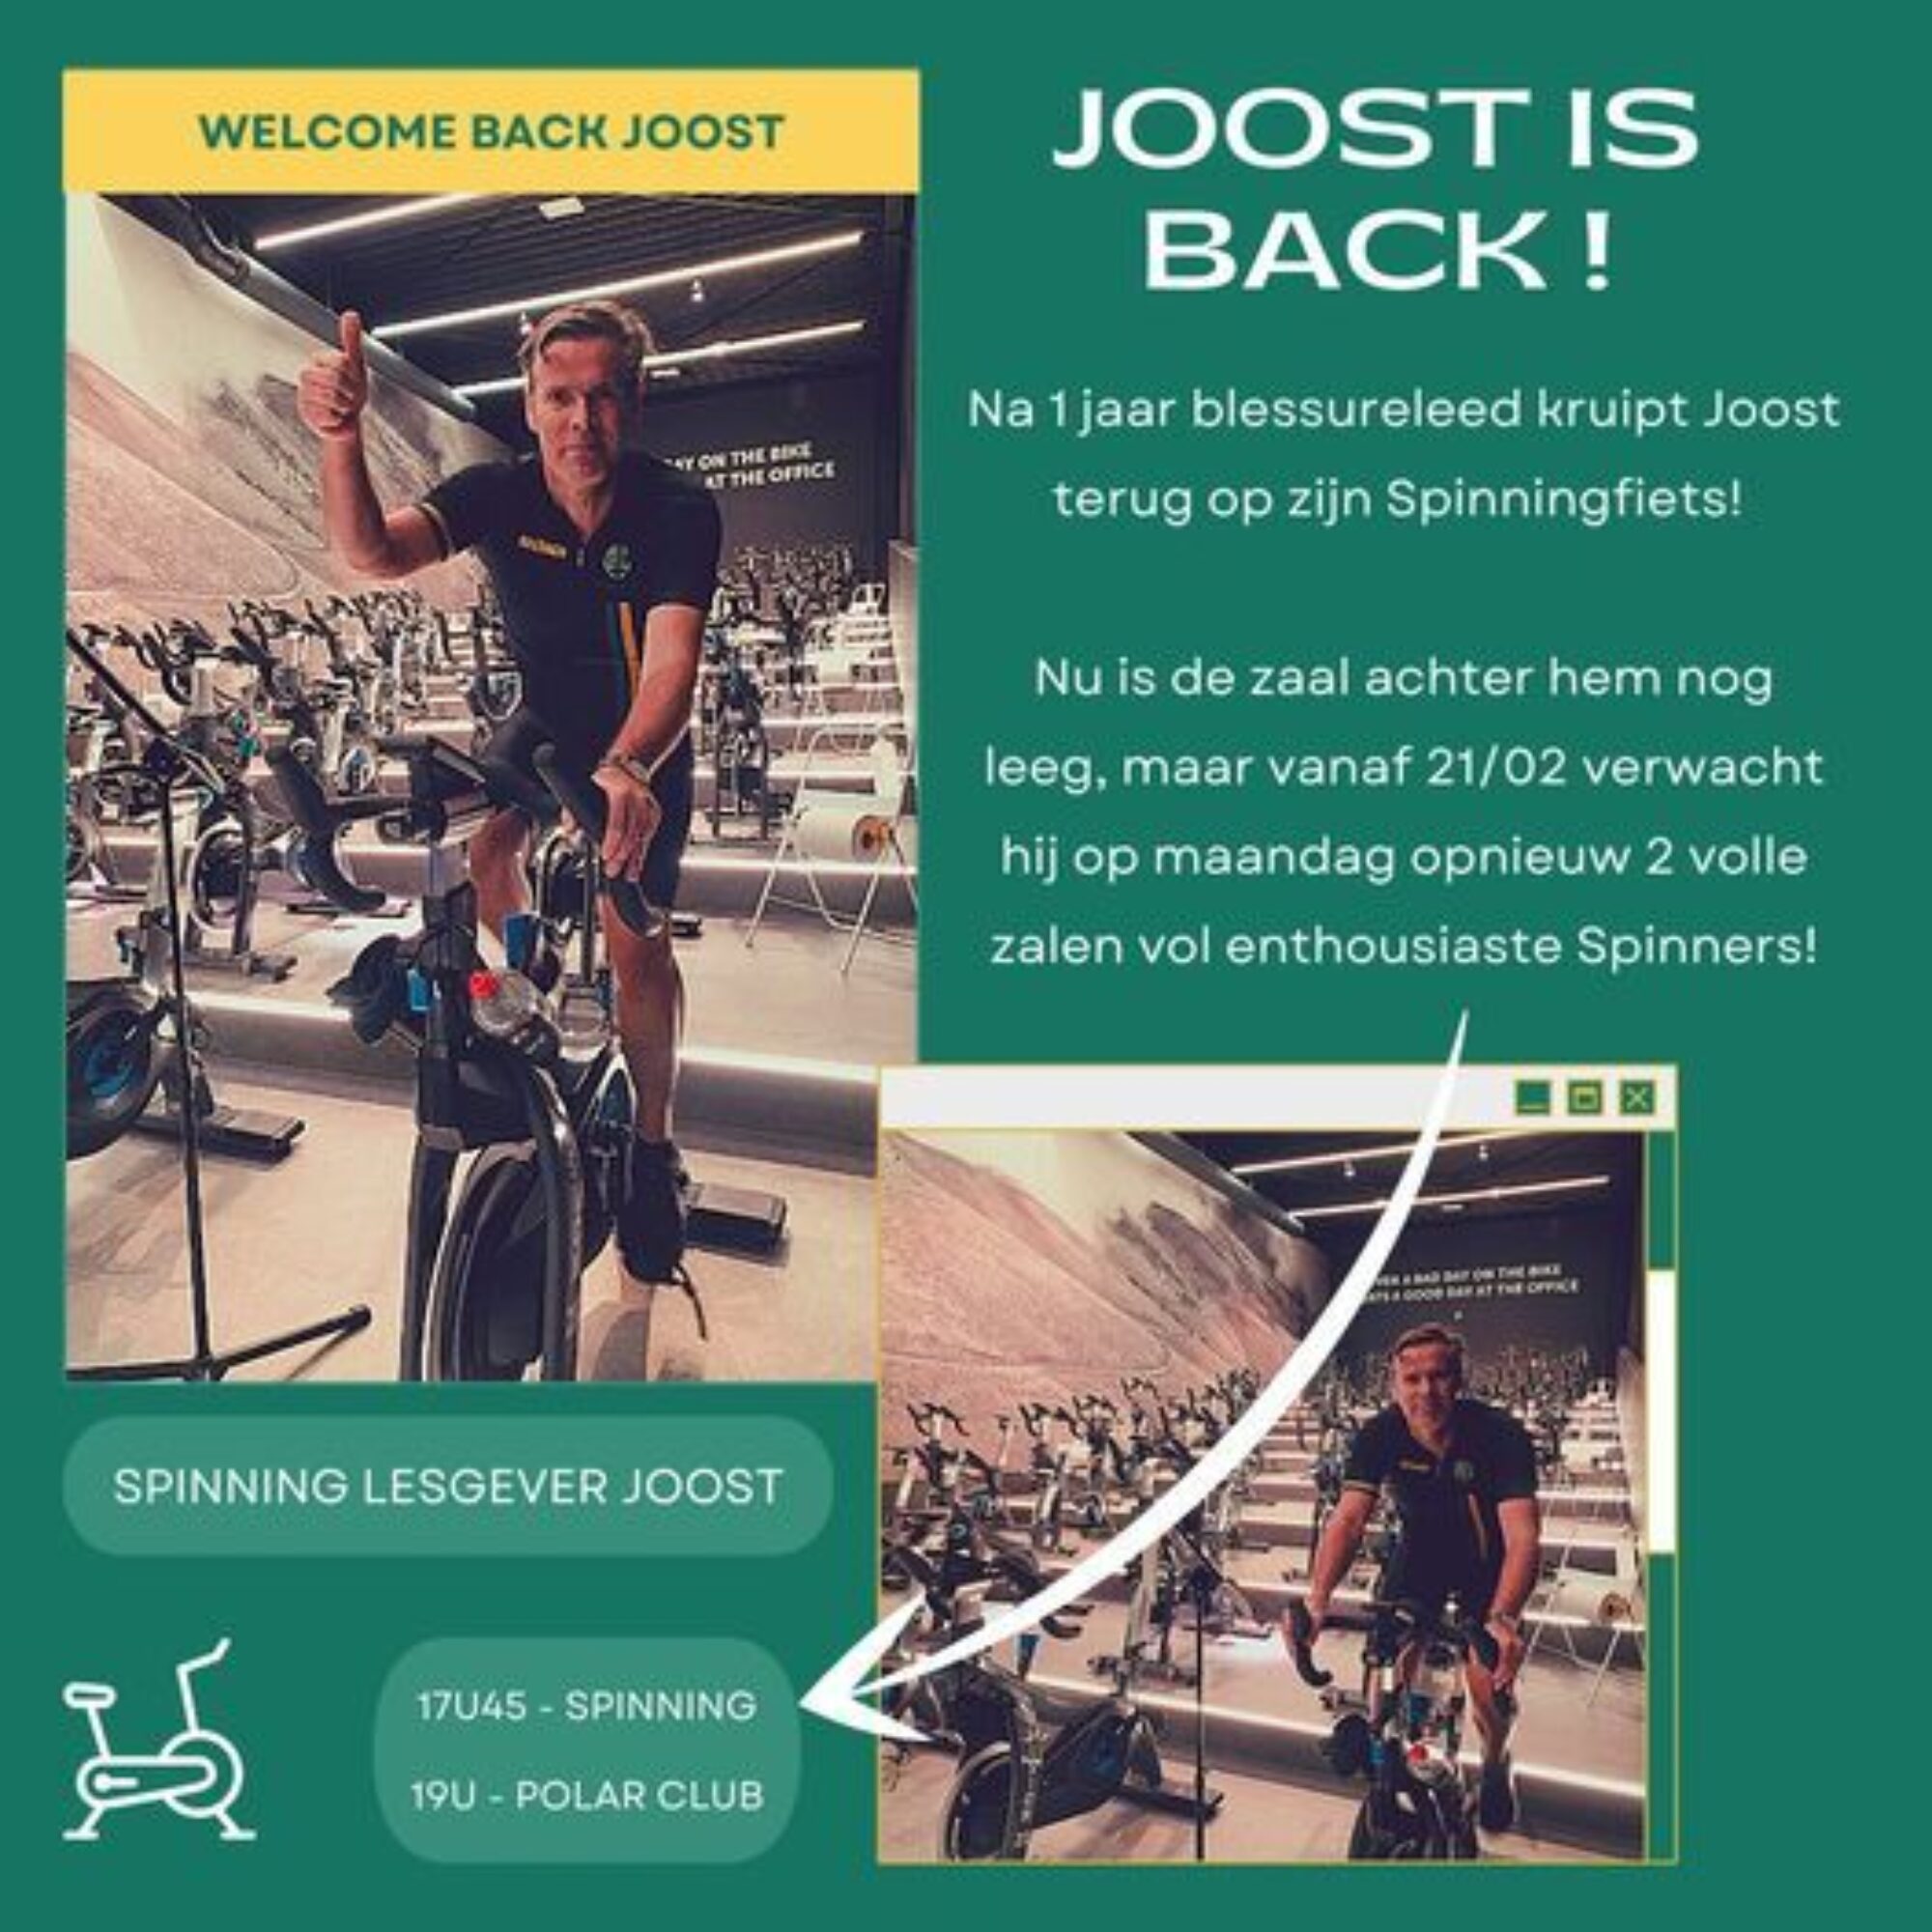 Joost is back